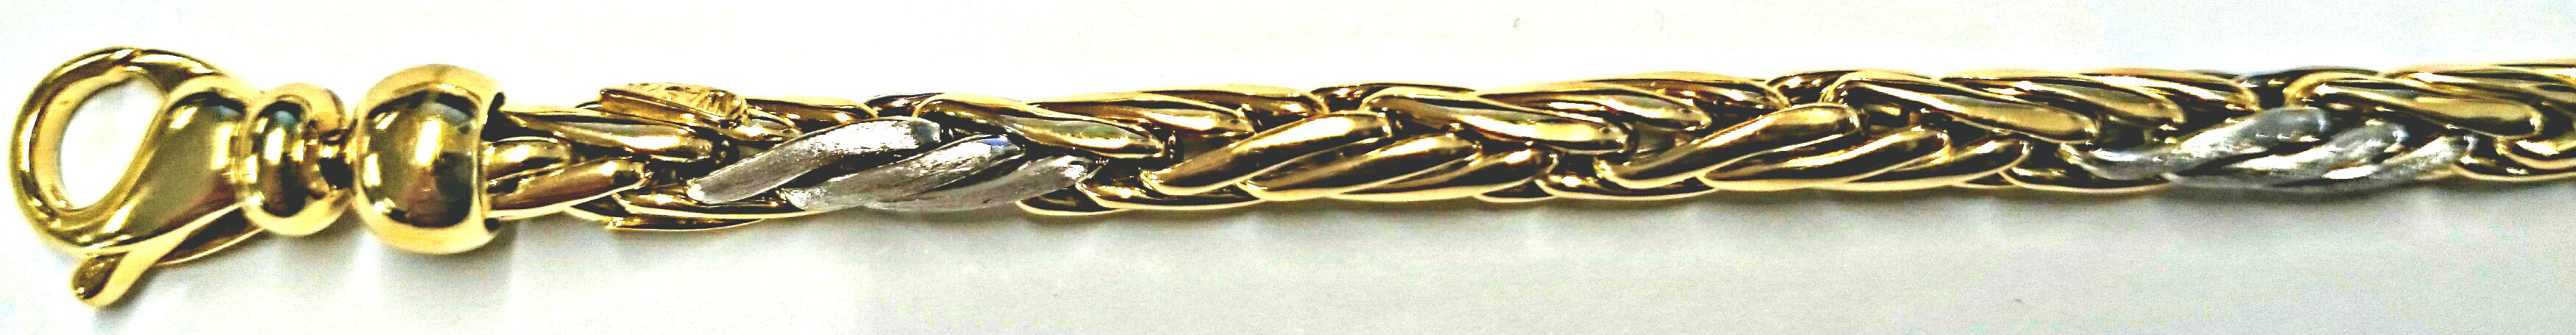 Armband Bicolor (Gelb-/Weissgold)  750 Handarbeit 19cm